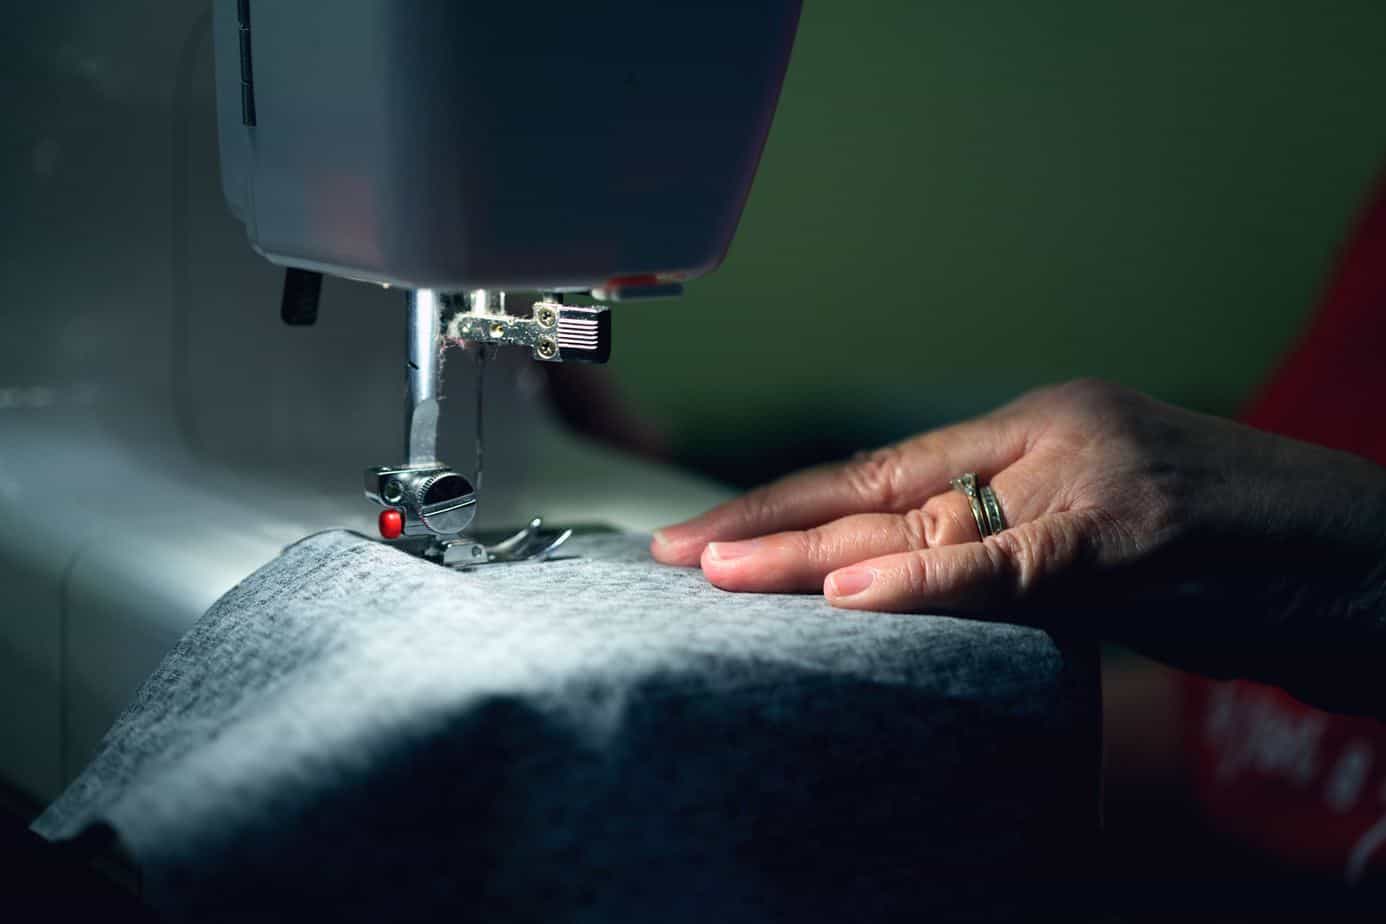 mejor máquina de coser para principiantes 2022